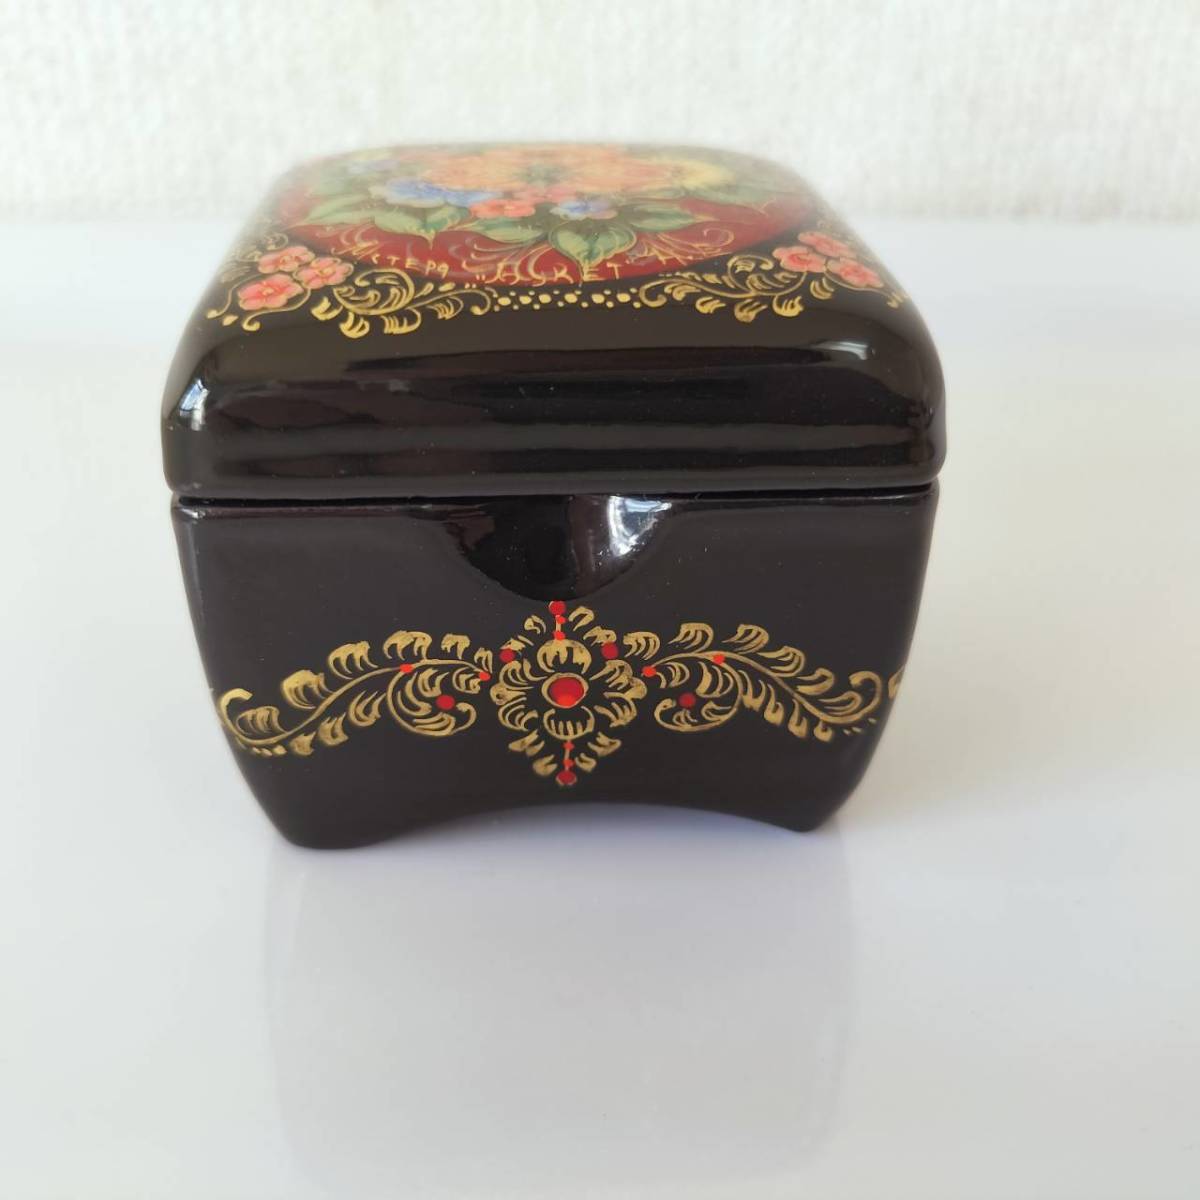 [PAL011] 俄罗斯, 手工微型漆盒(Mstera), 手工制品, 内部的, 杂货, 装饰品, 目的